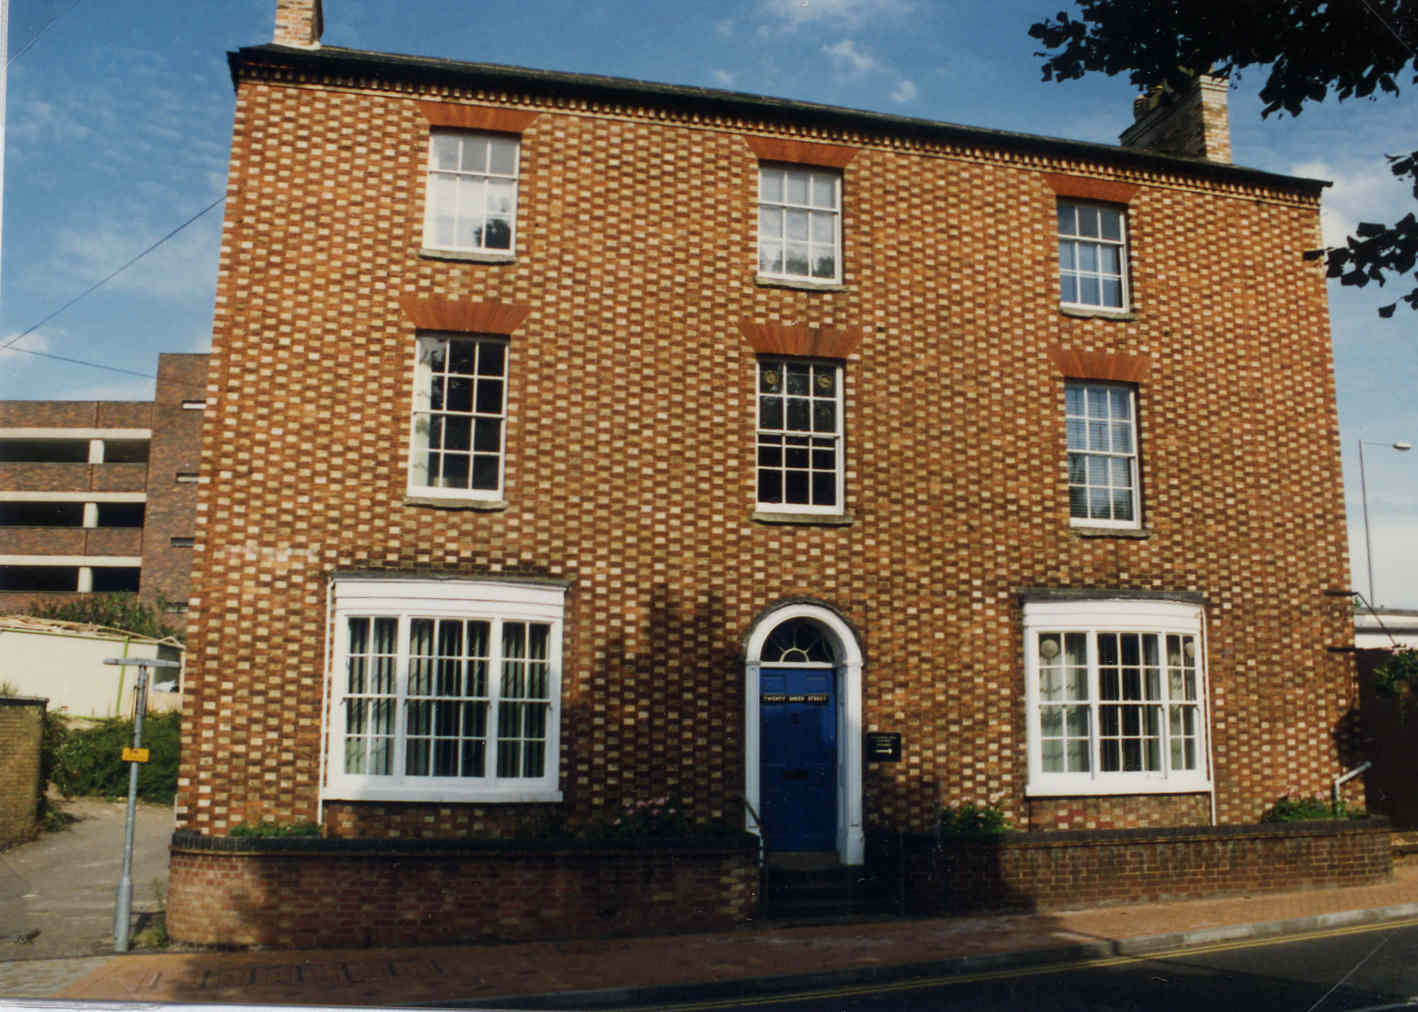 Dulley House, Wellingborough